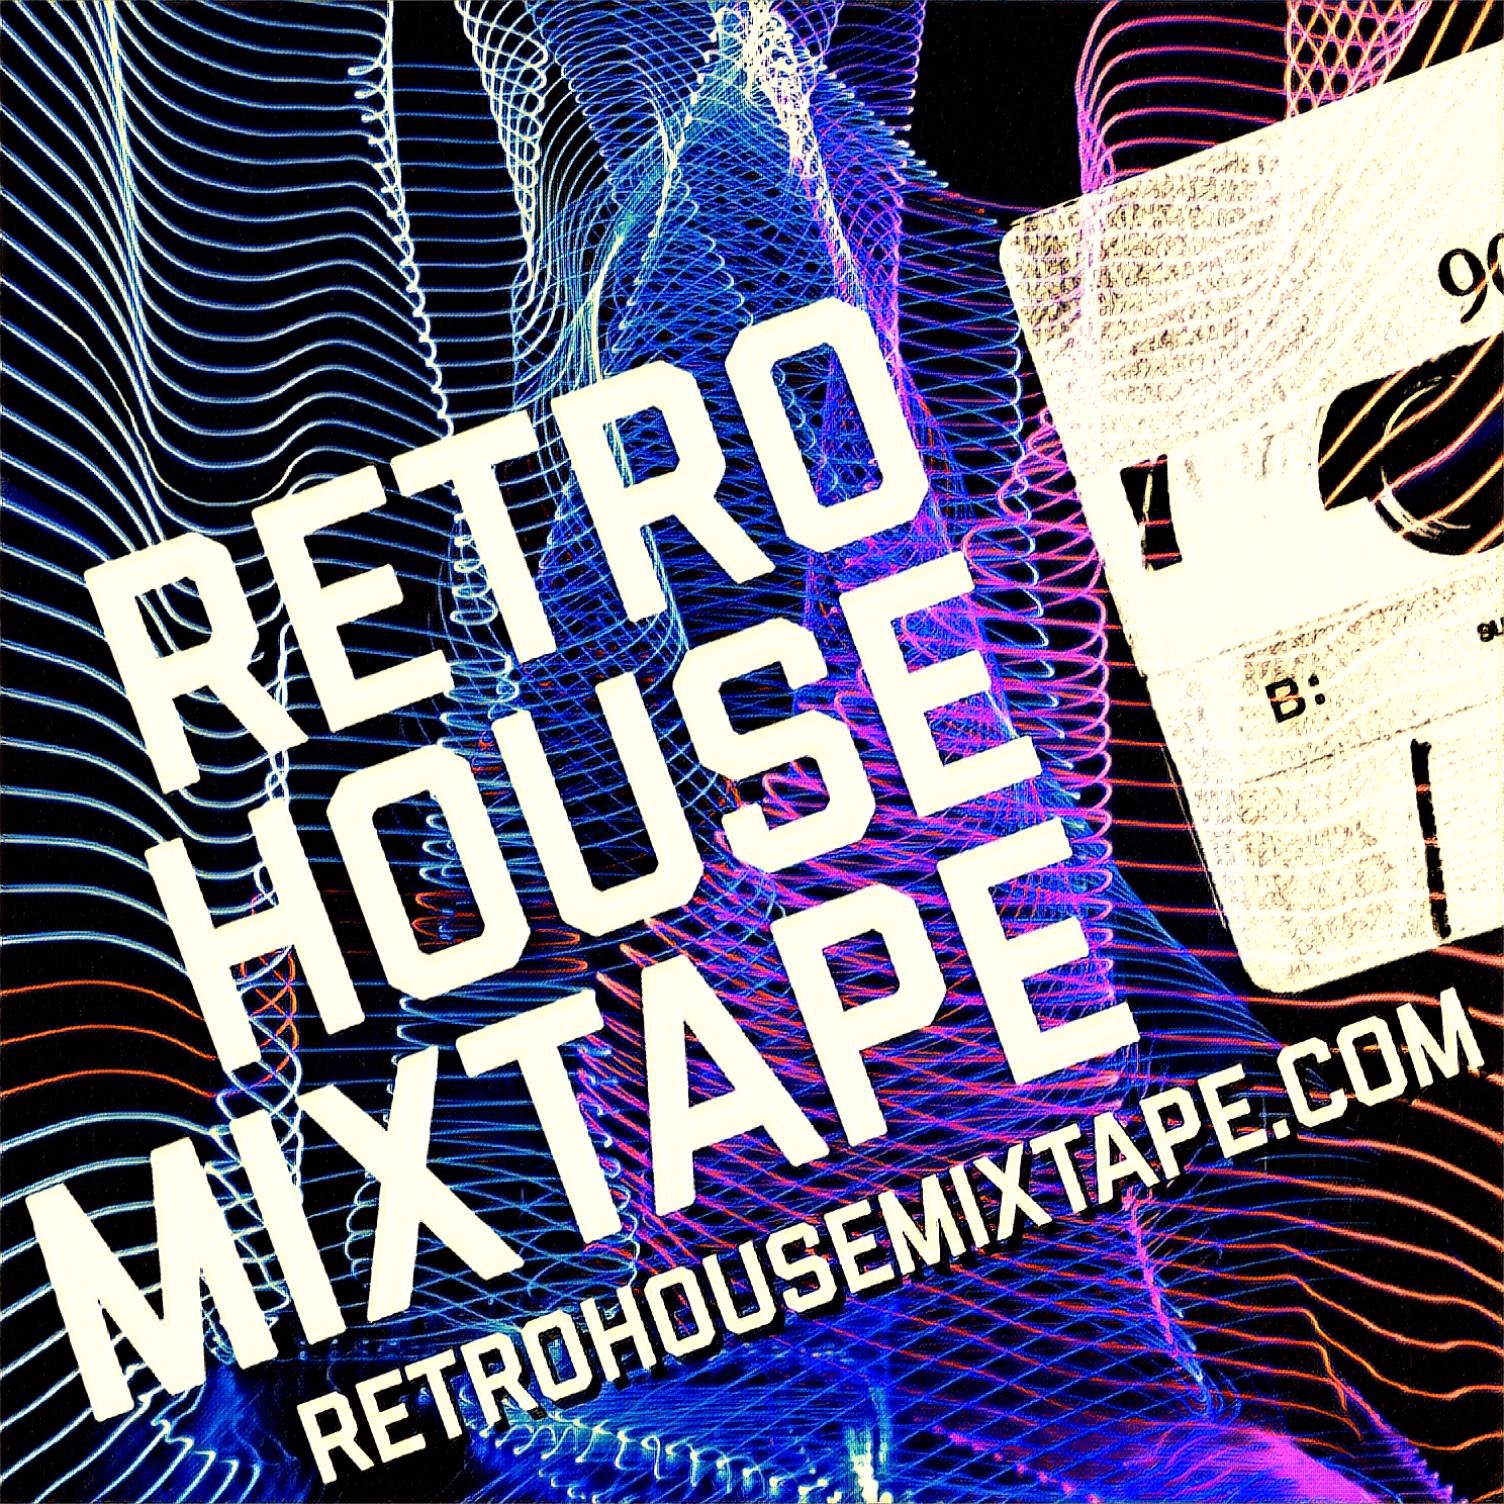 Retro House Mixtape - House Tunes